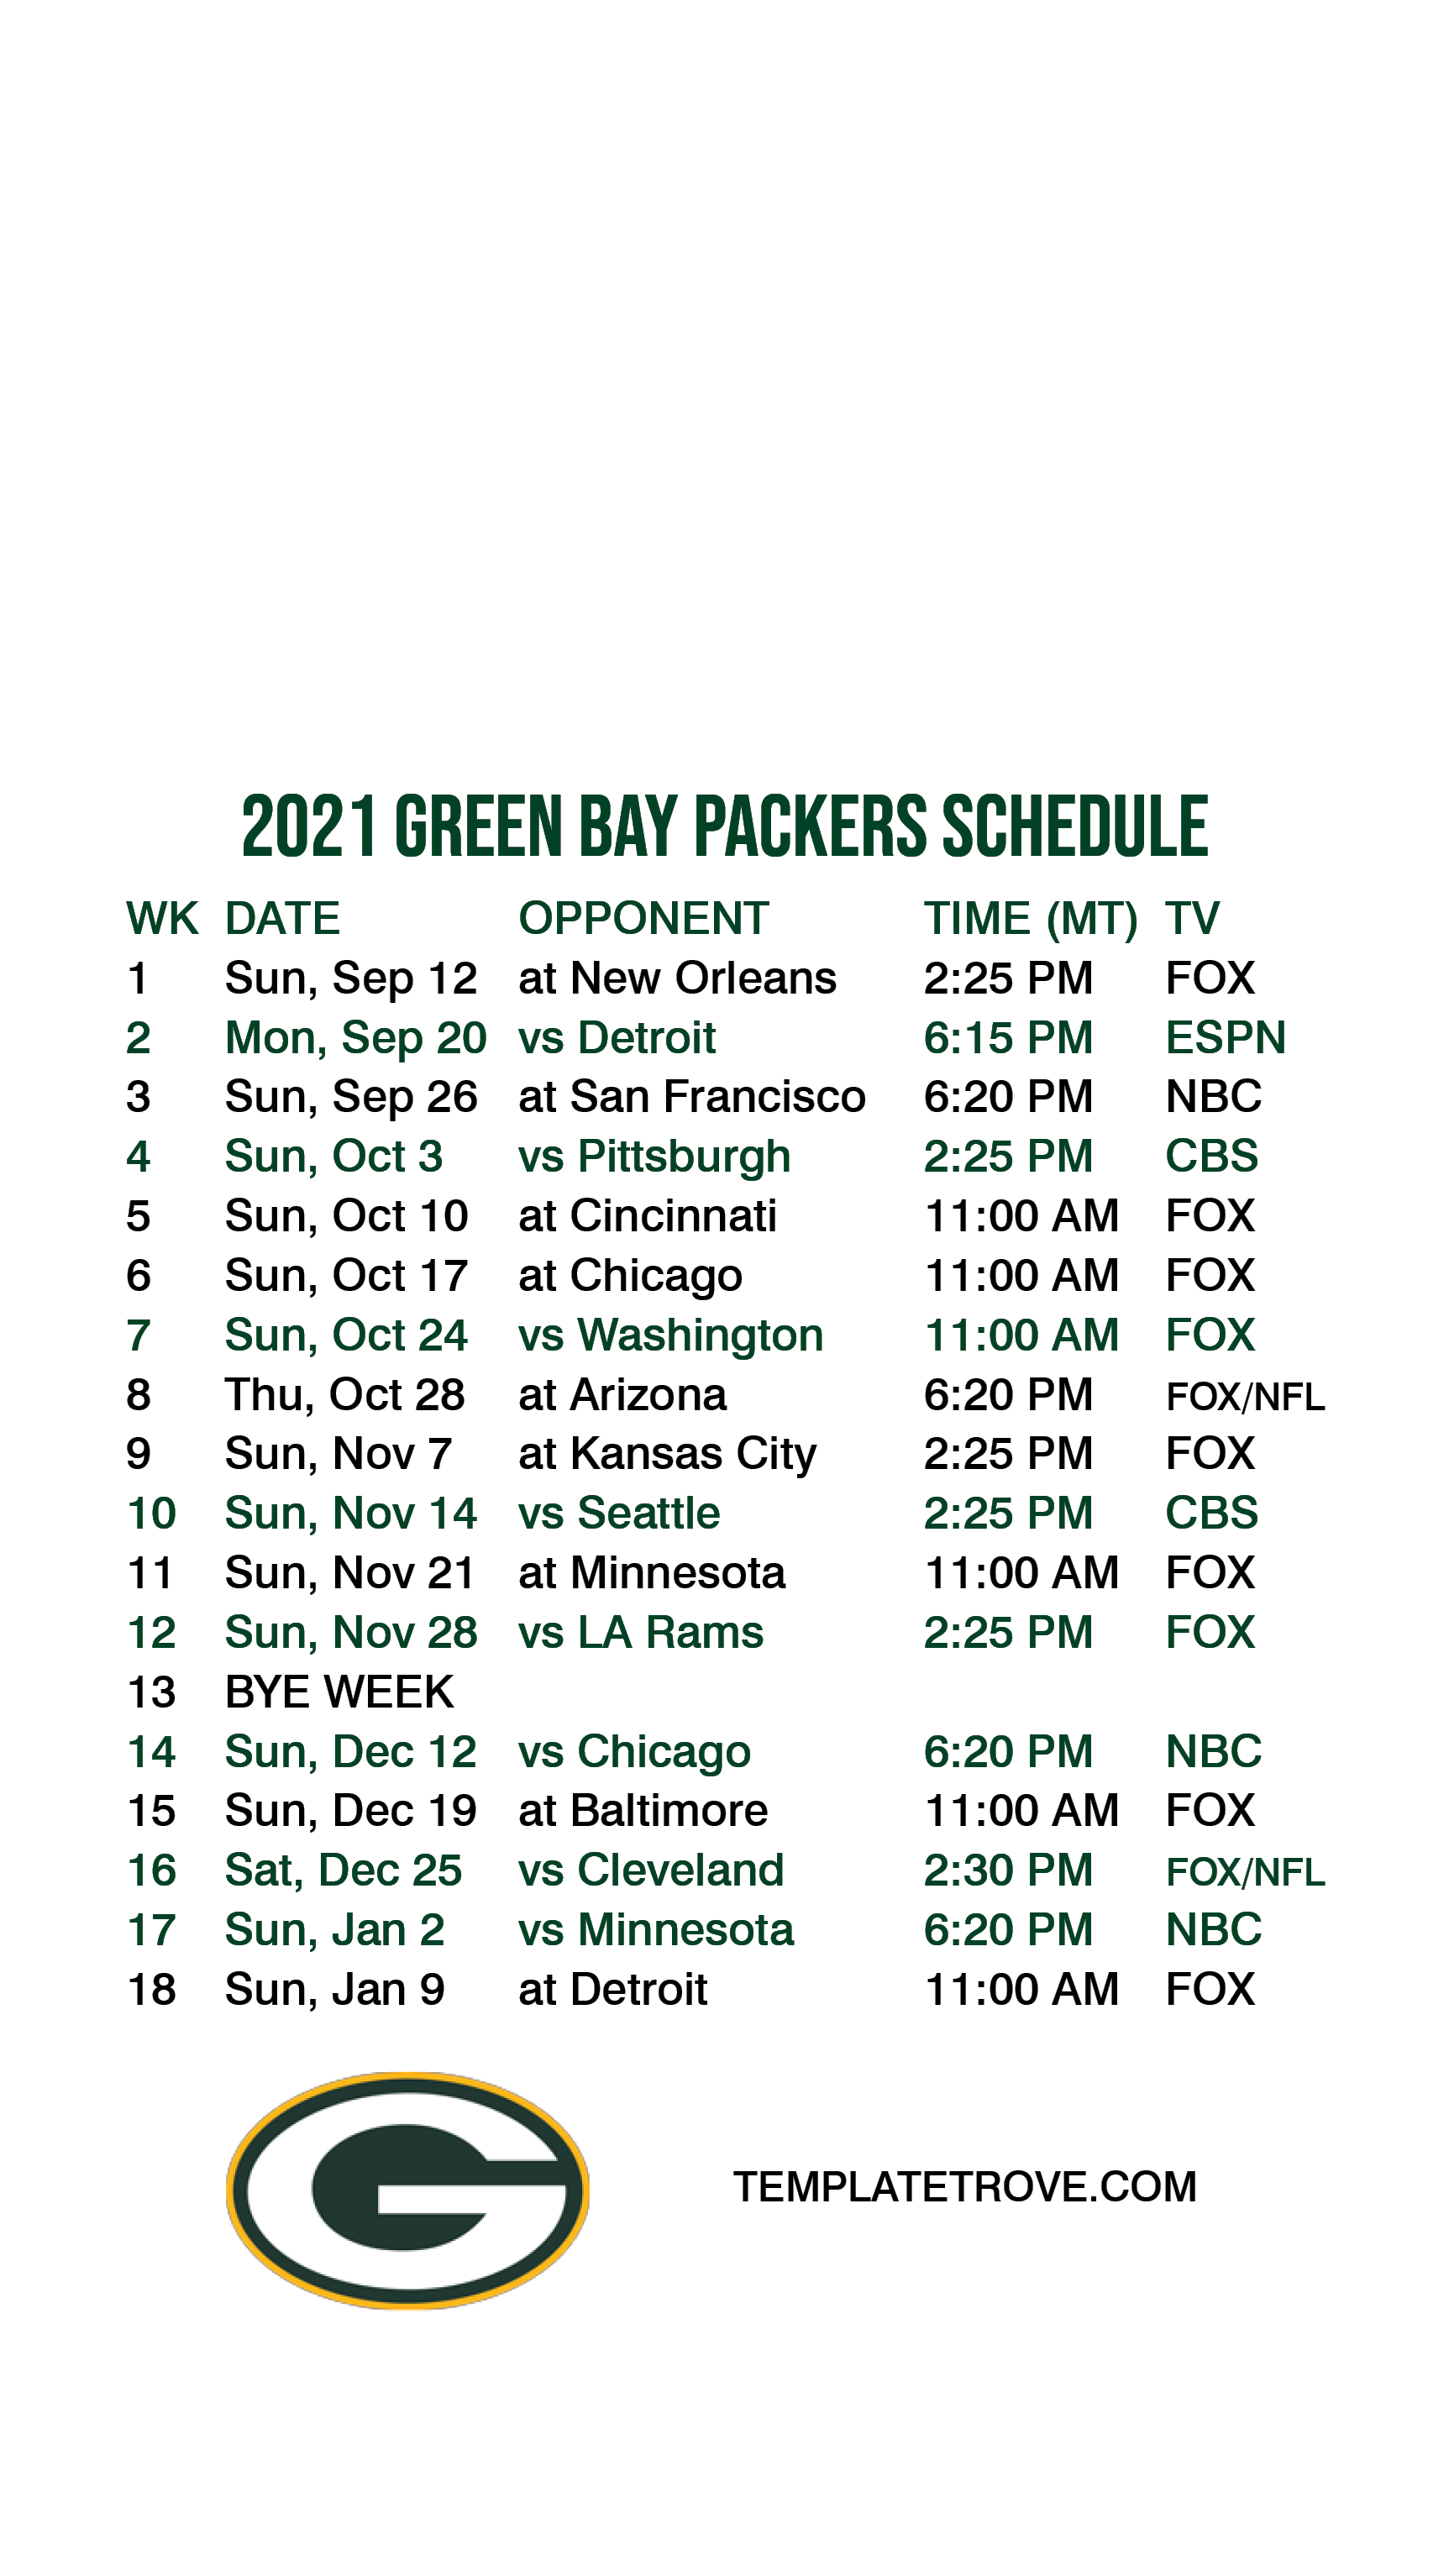 2015 green bay packer schedule